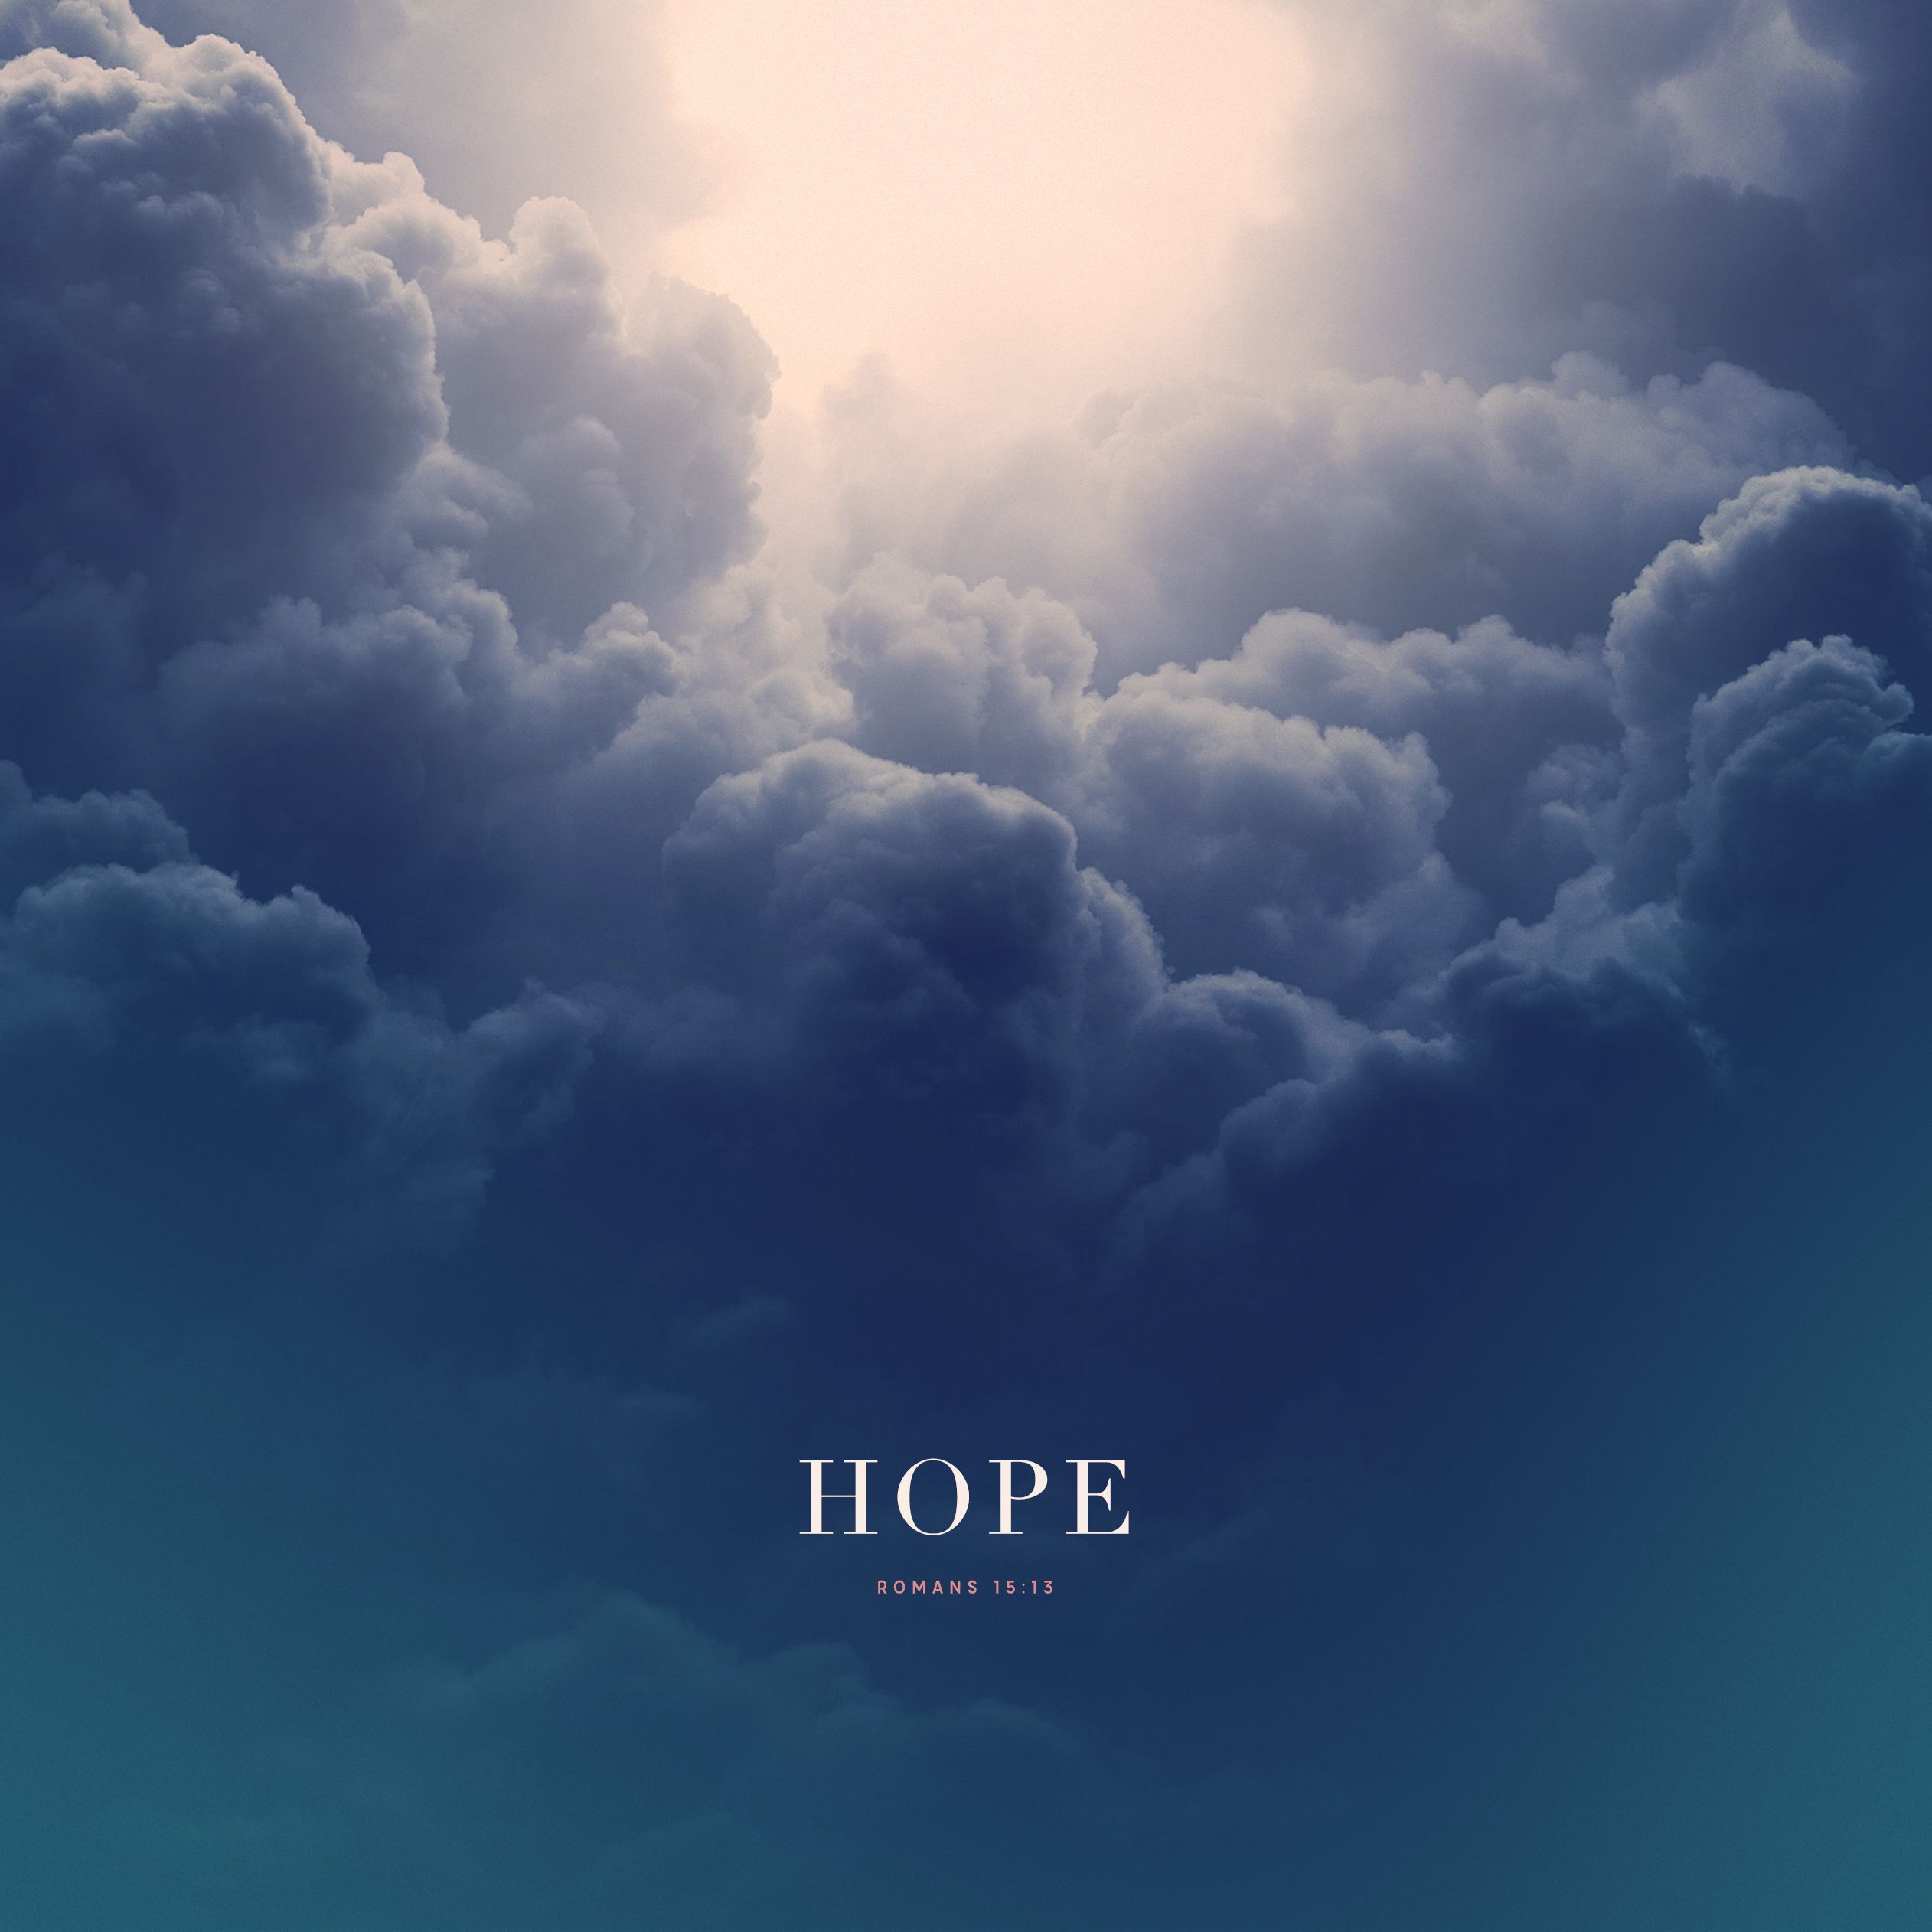 Antent hope. Hope. Hope фон. Hope картинки. Обои hope.